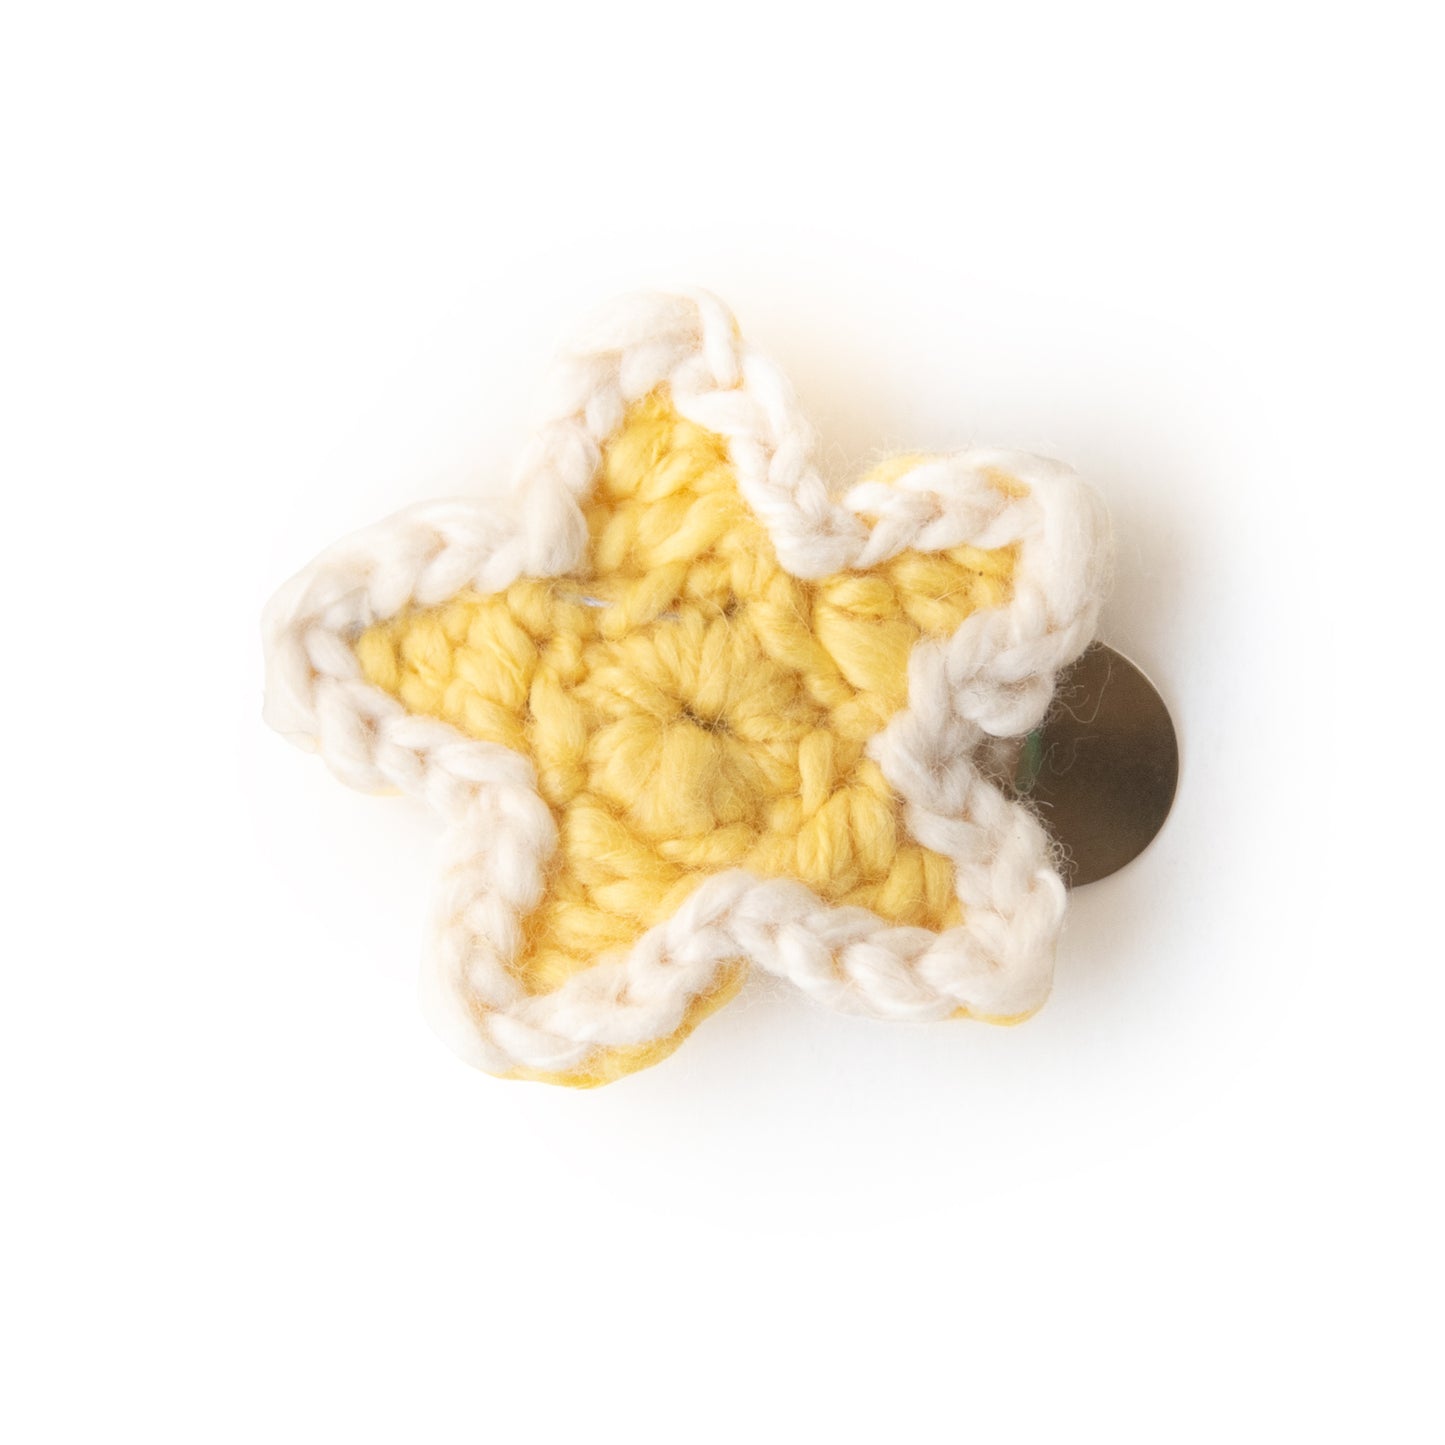 Fish and Stars Crochet Hair Clip Set